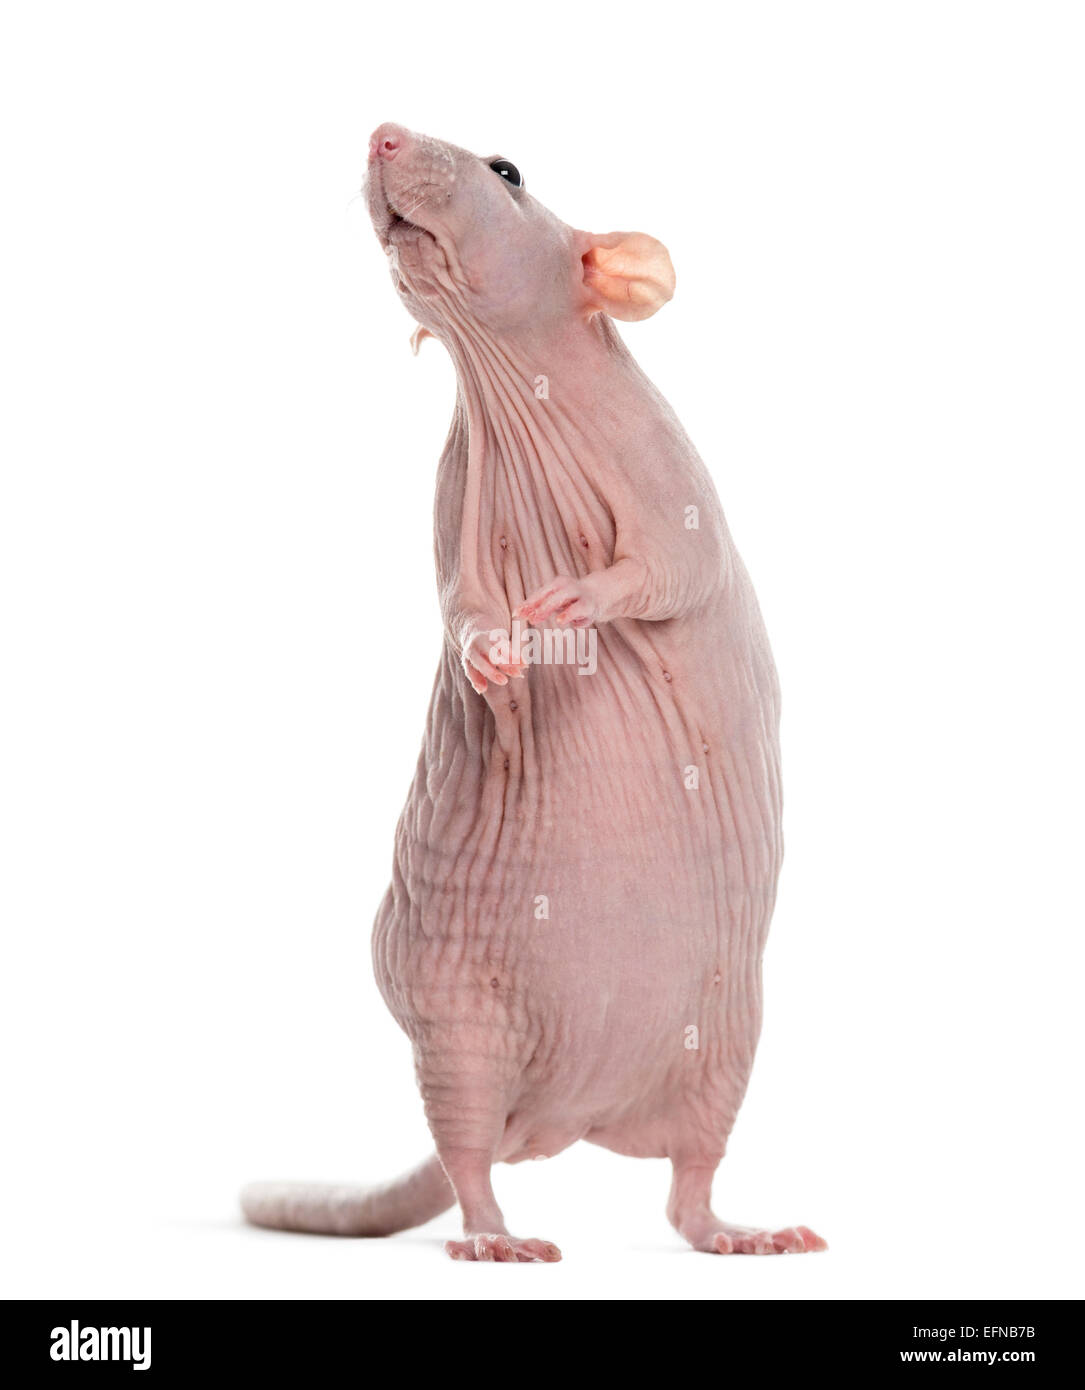 Hairless rat, Rattus norvegicus, against white background Stock Photo